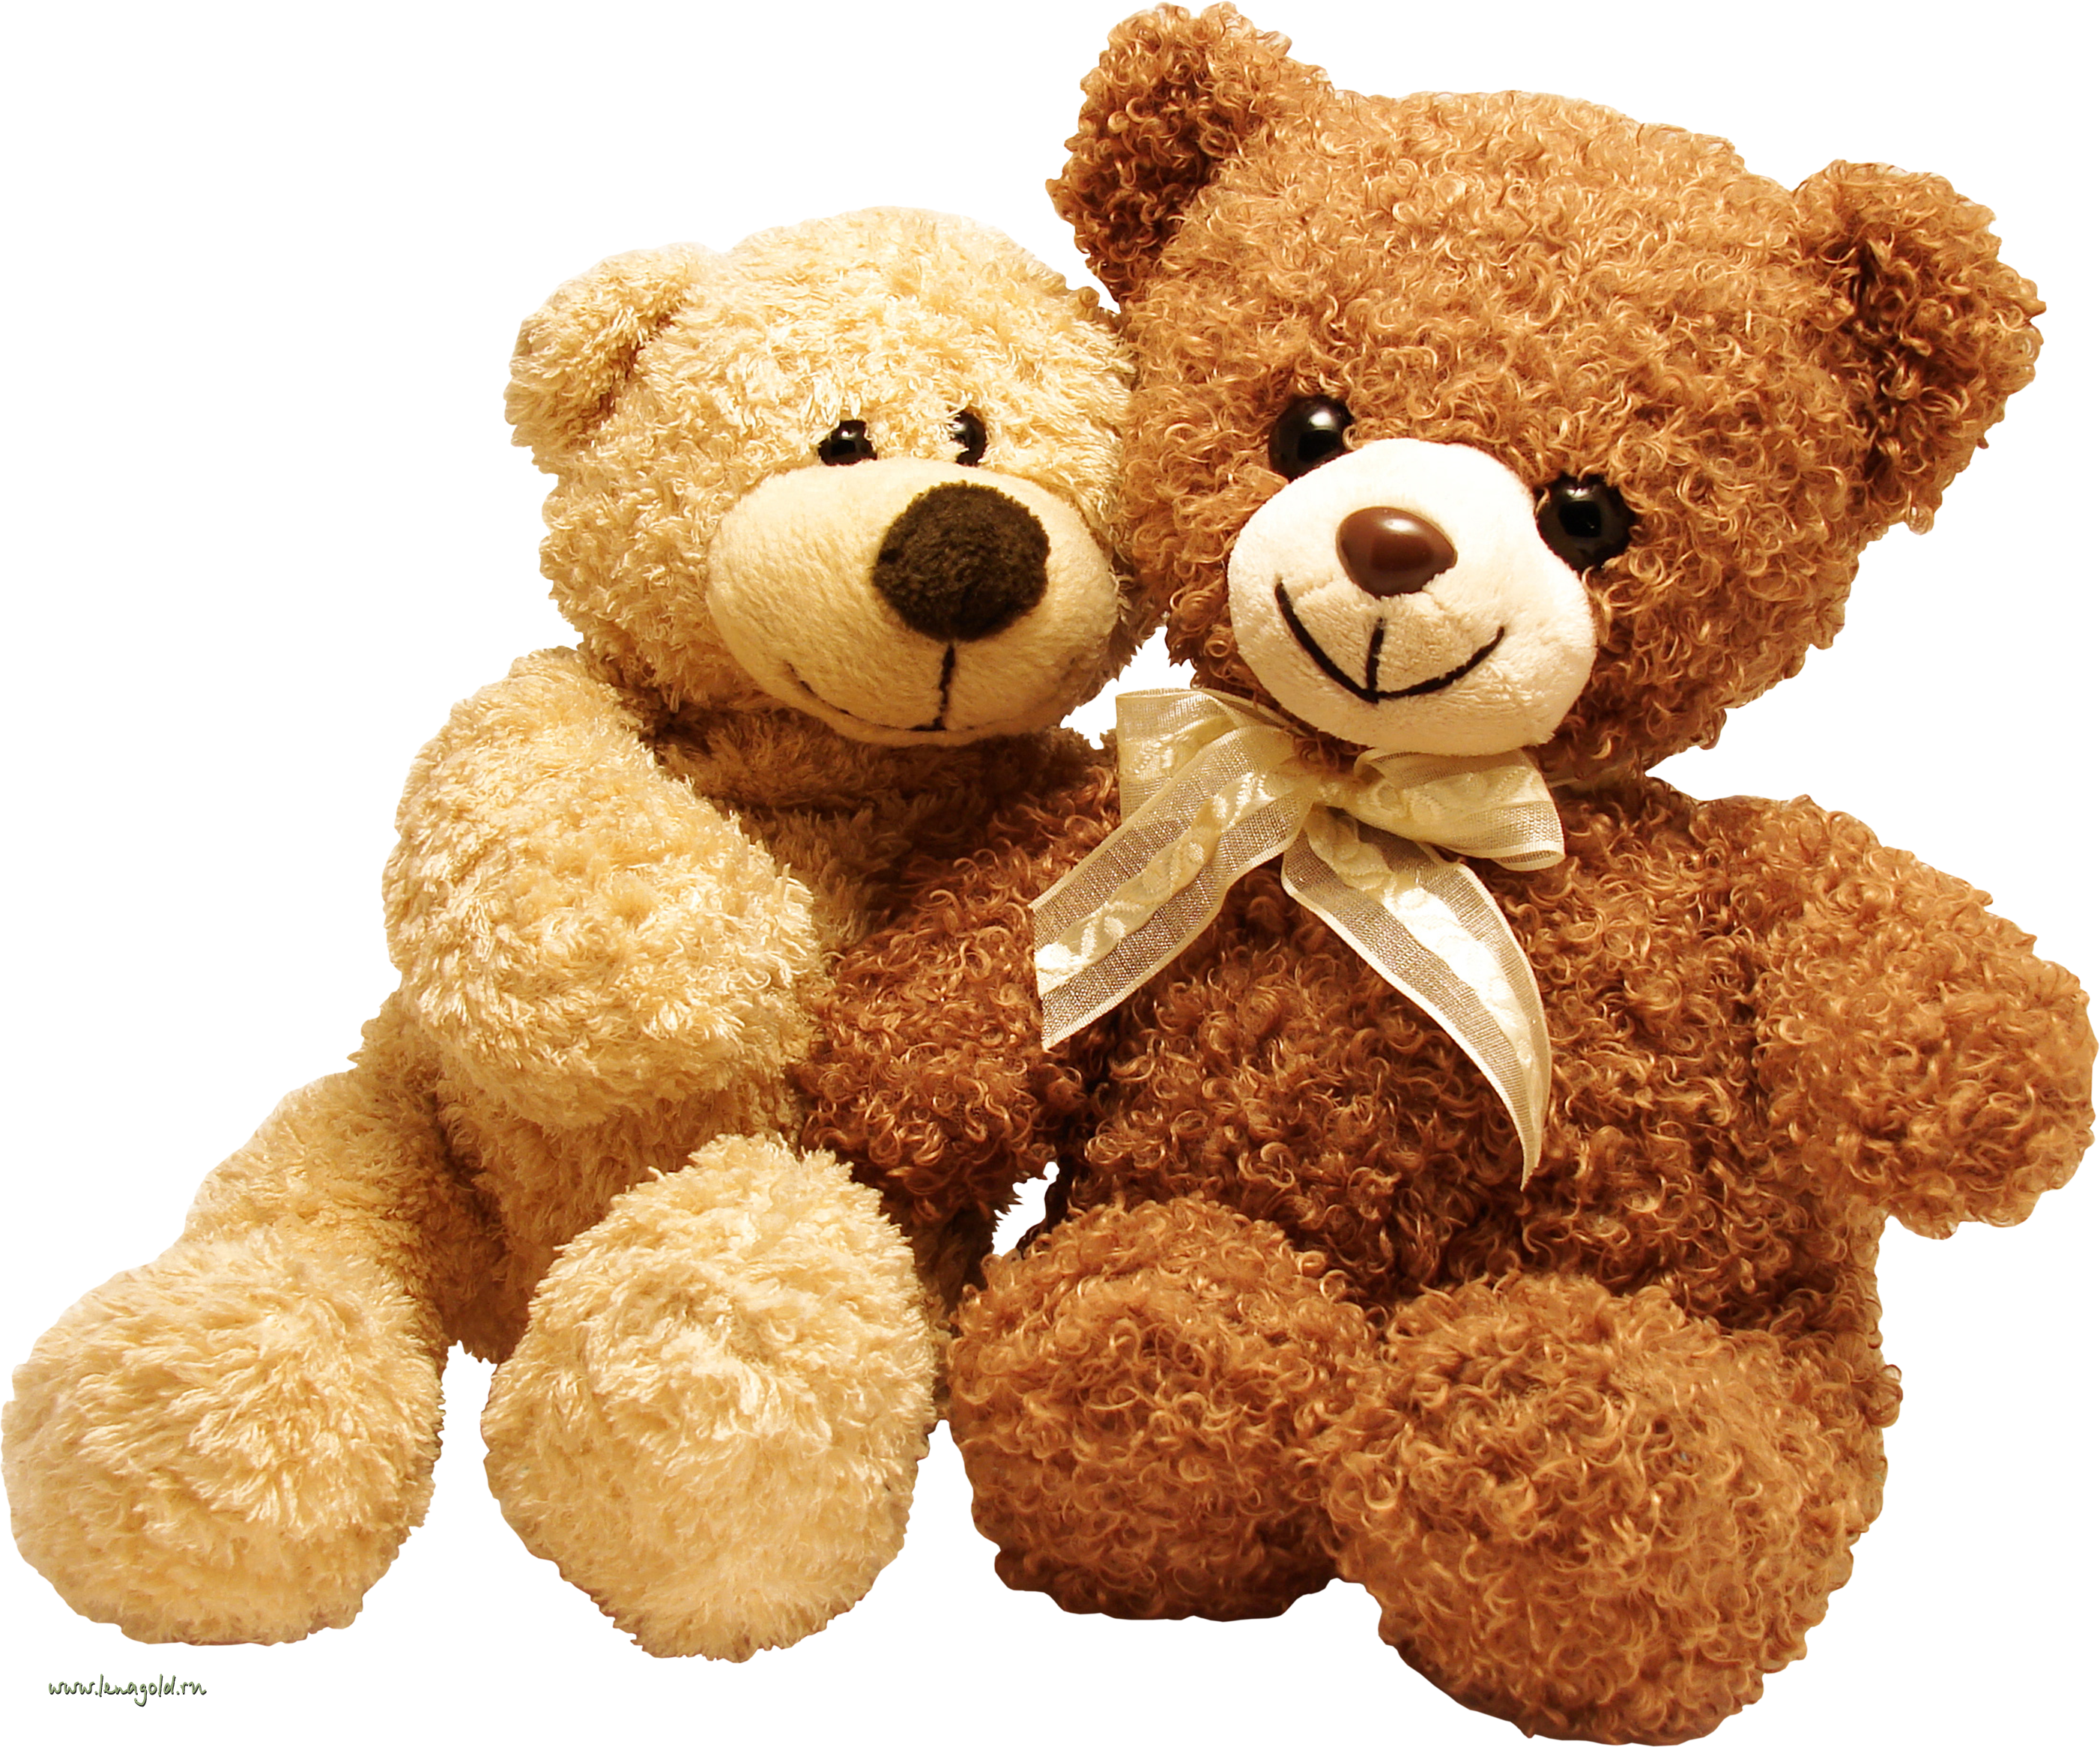 Teddy Bear, Doll, Teddy, Bear